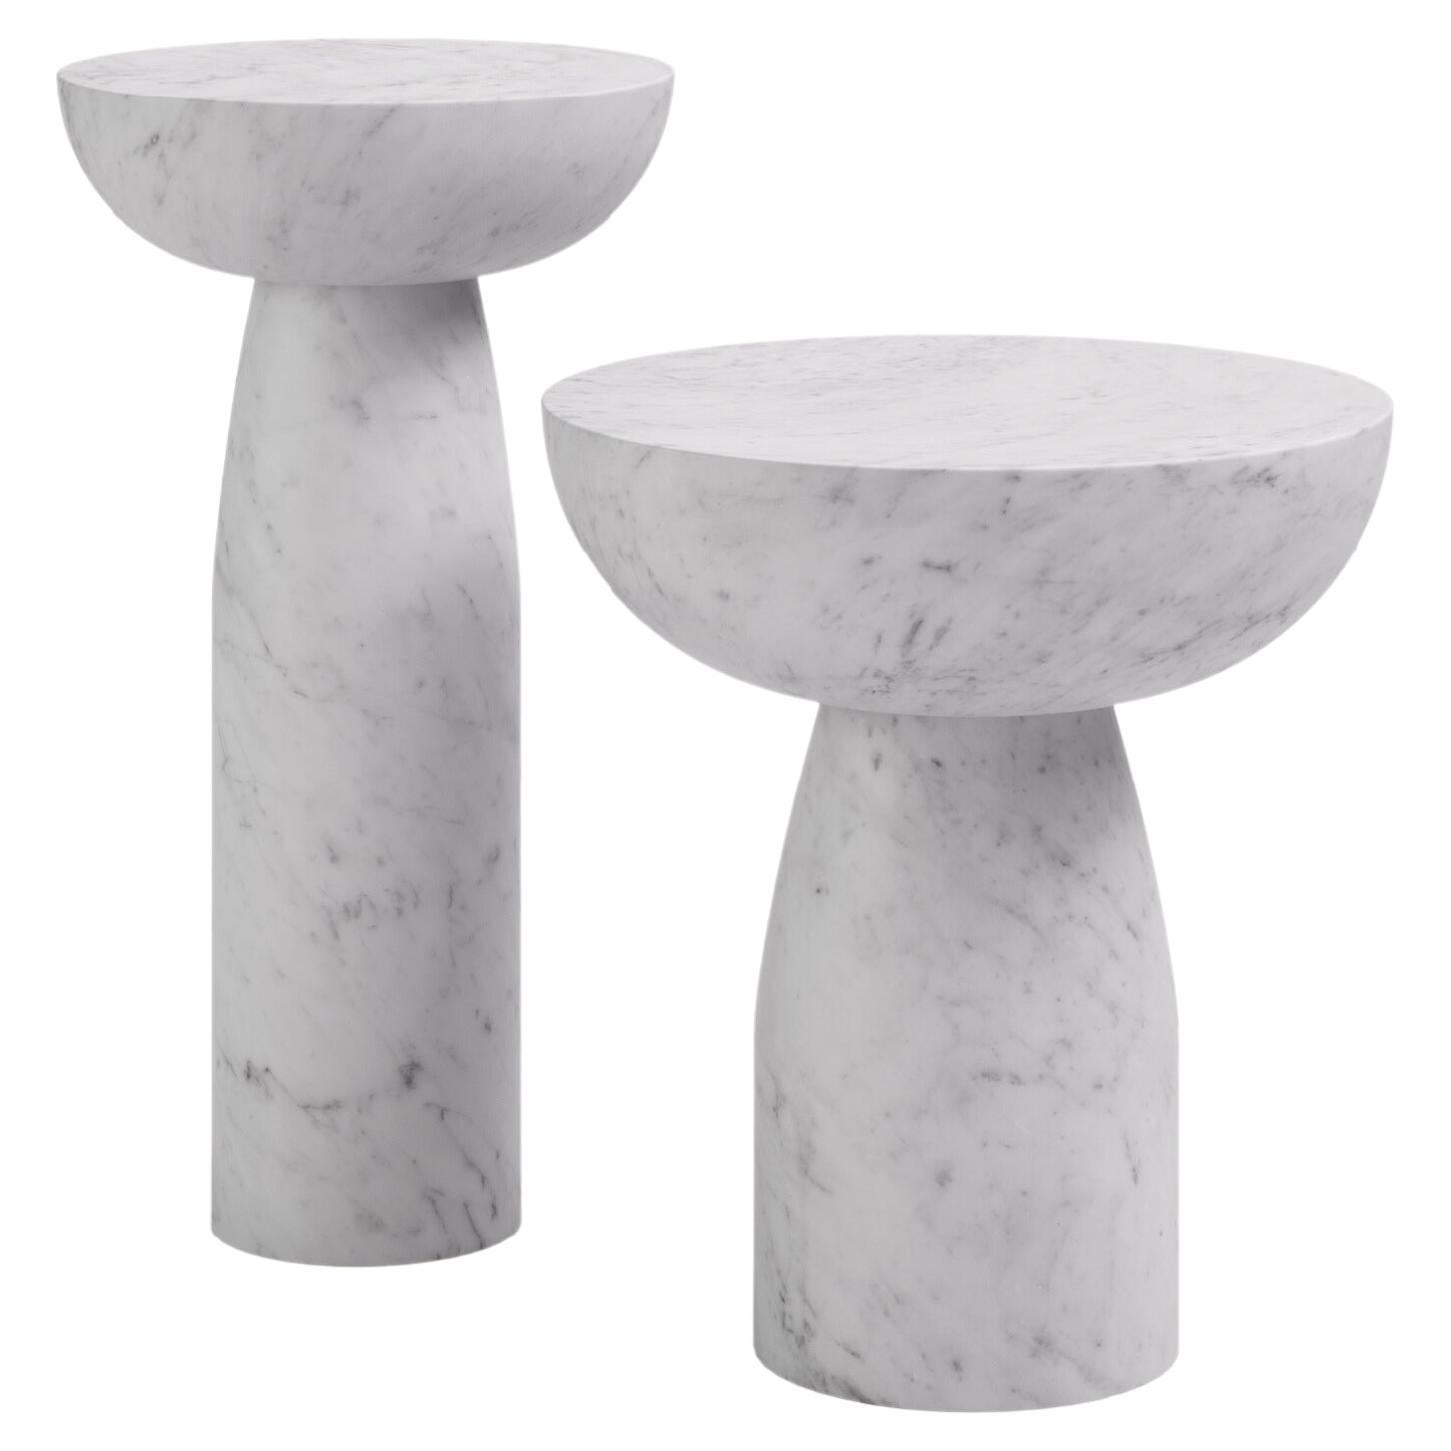 FORM(LA) Sfera Round Side Table 14”L x 14”W x 26”H Carrara Bianco Marble For Sale